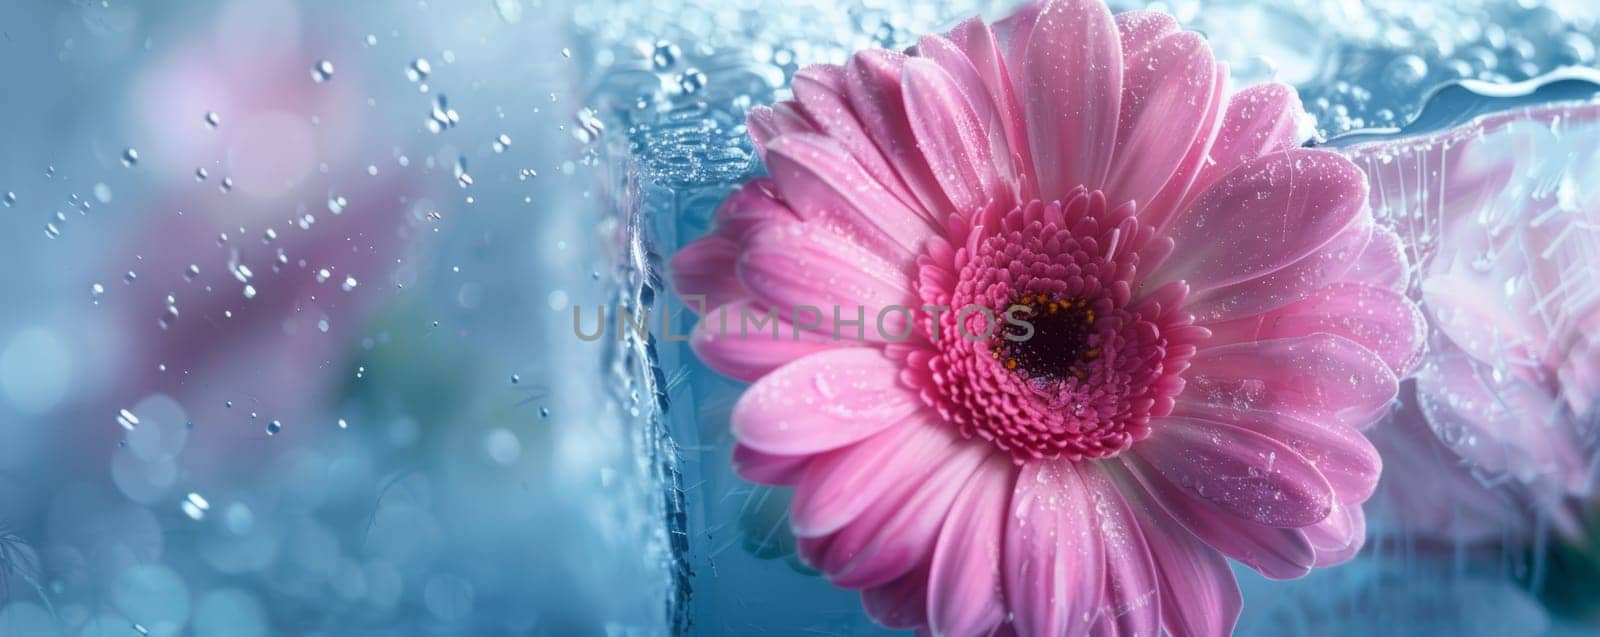 Pink gerbera flower resting on a ice crystal by Anastasiia